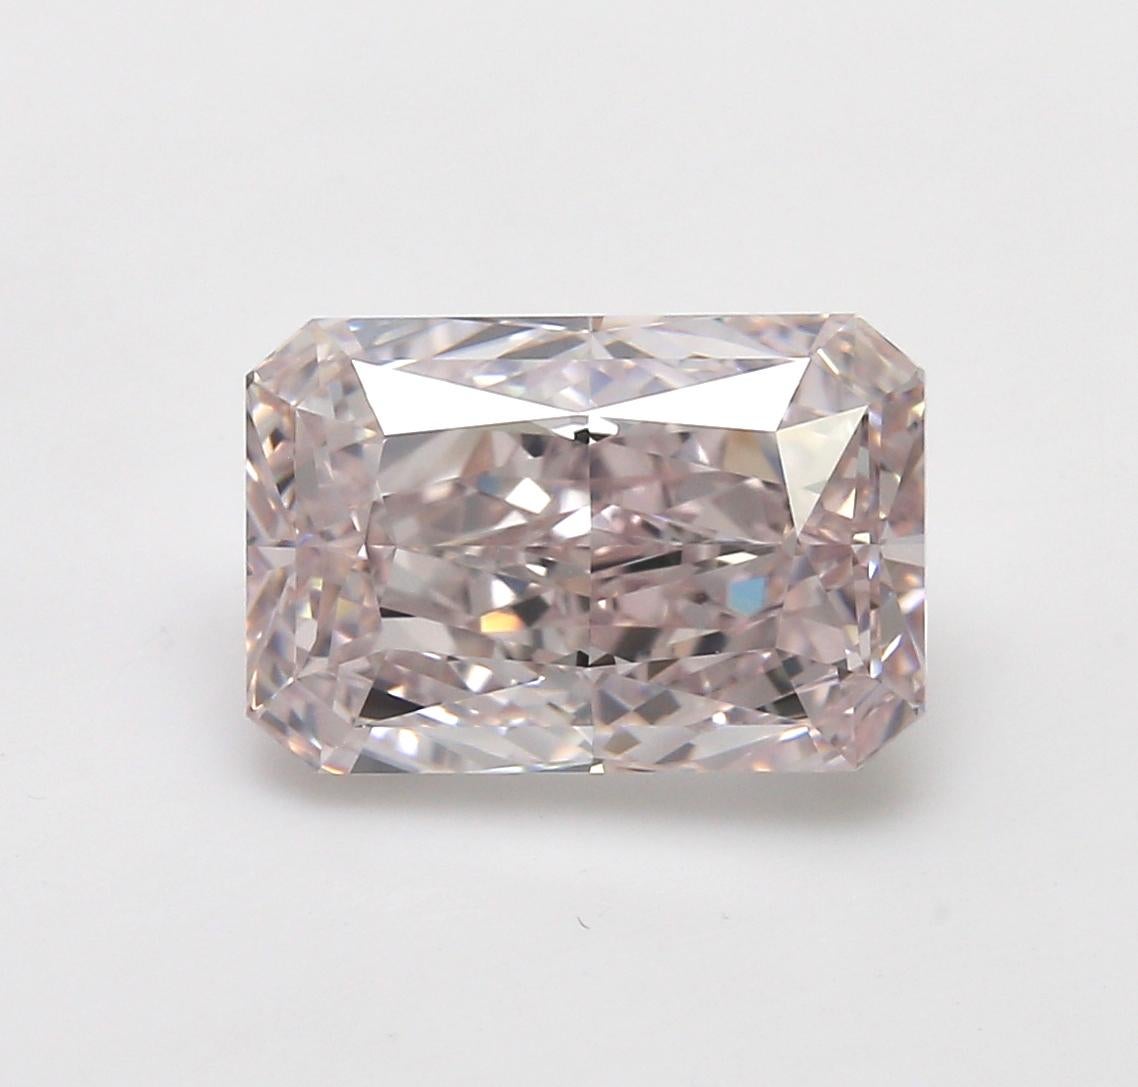 I FLAWLESS GIA Certified 5 Carat Long Radiant Cut Fancy Light Pink Diamond